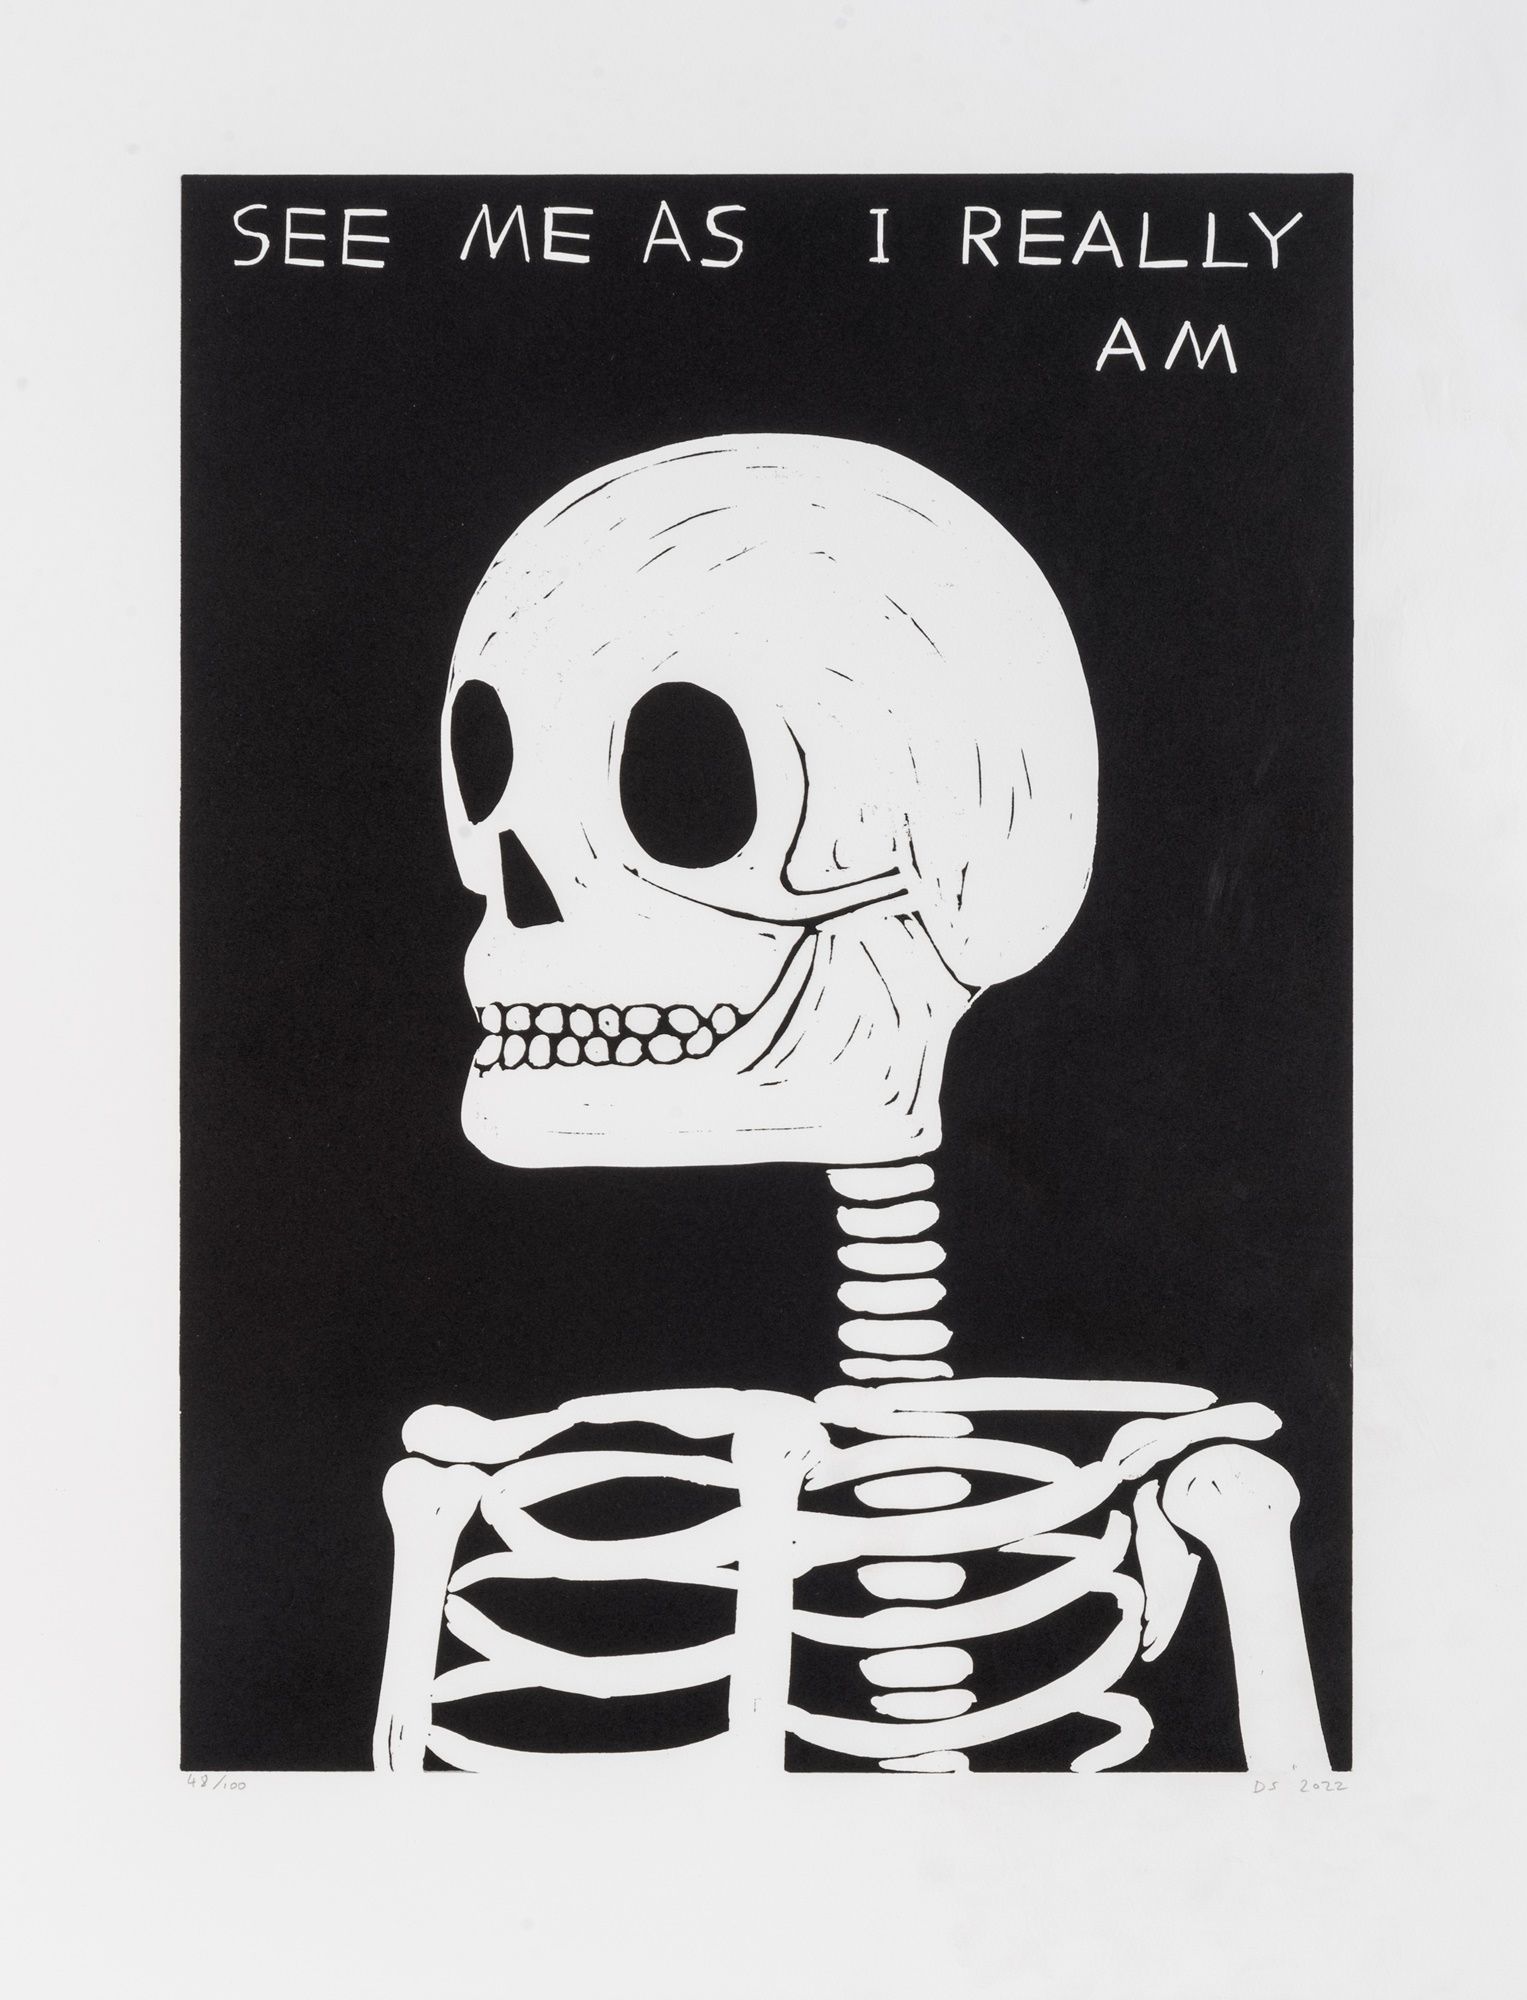 skeleton backgrounds tumblr